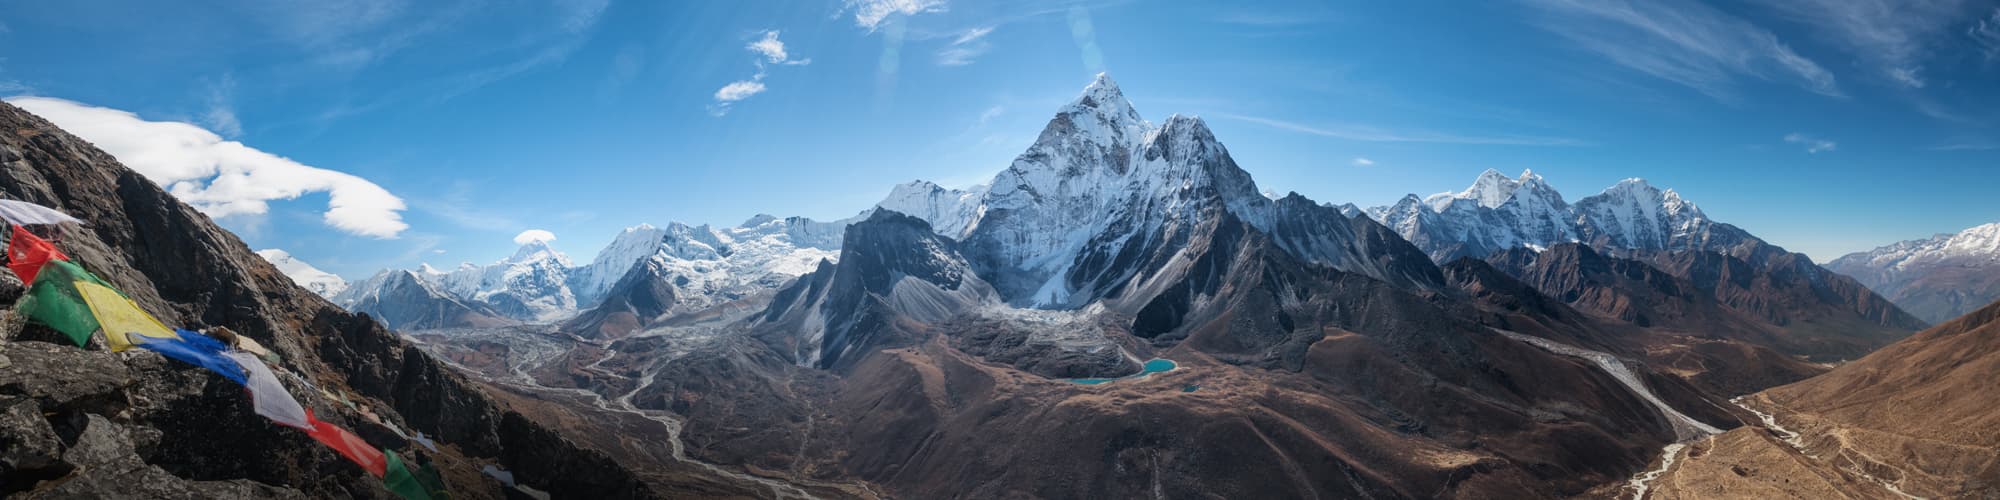 Voyage Patrimoine et Nature Inde Himalayenne © Alex Shestakov / Adobe Stock